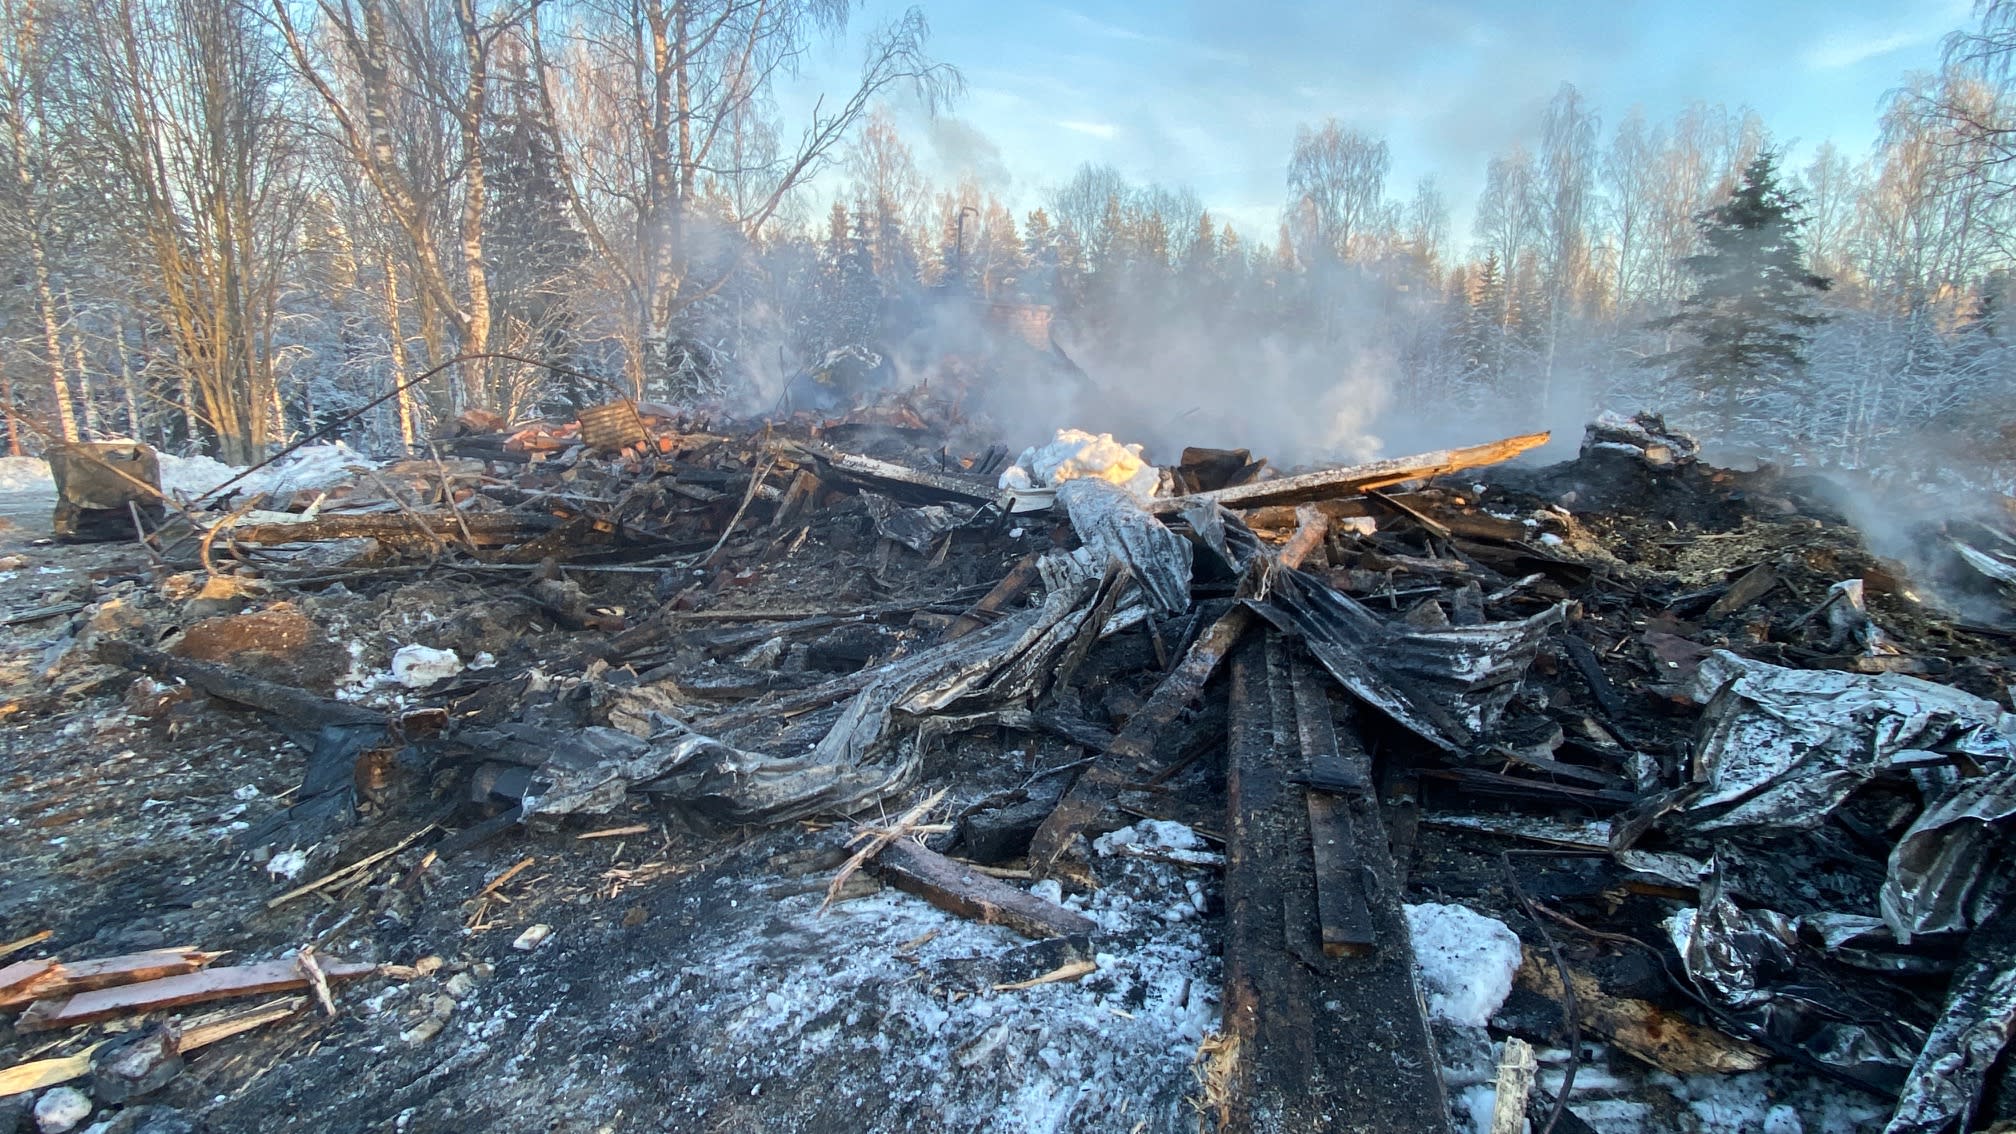 The police suspect that an elderly man set the Rautjärvi church on fire